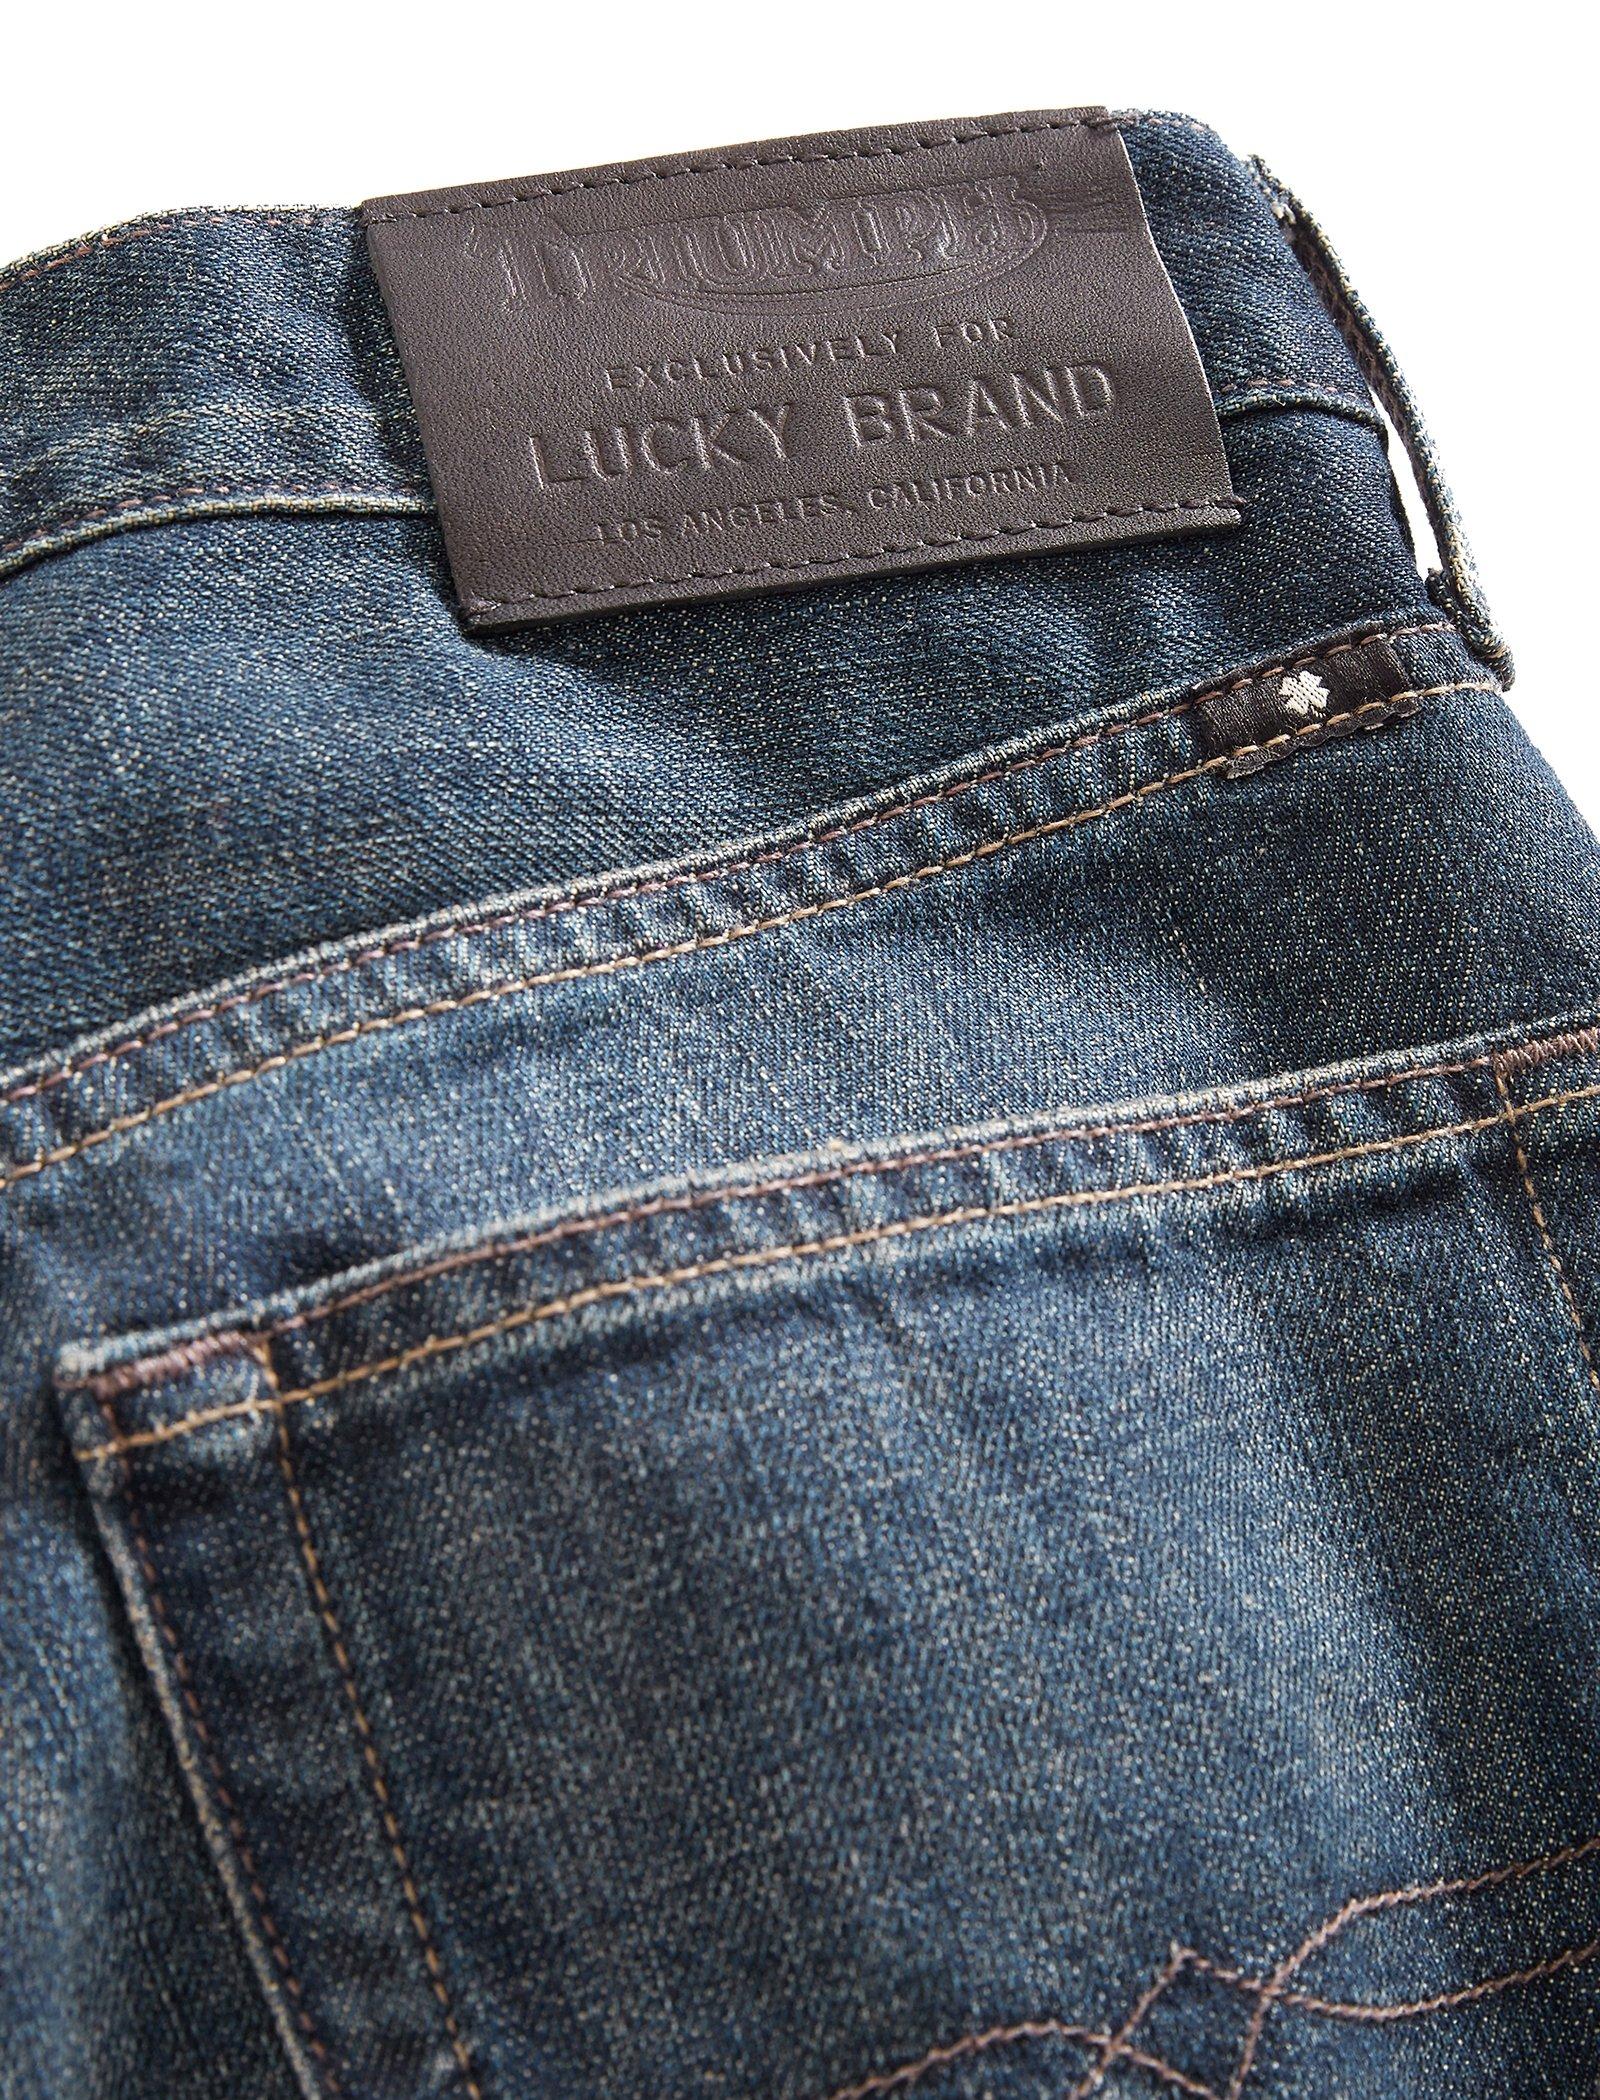 lucky brand jeans heritage slim